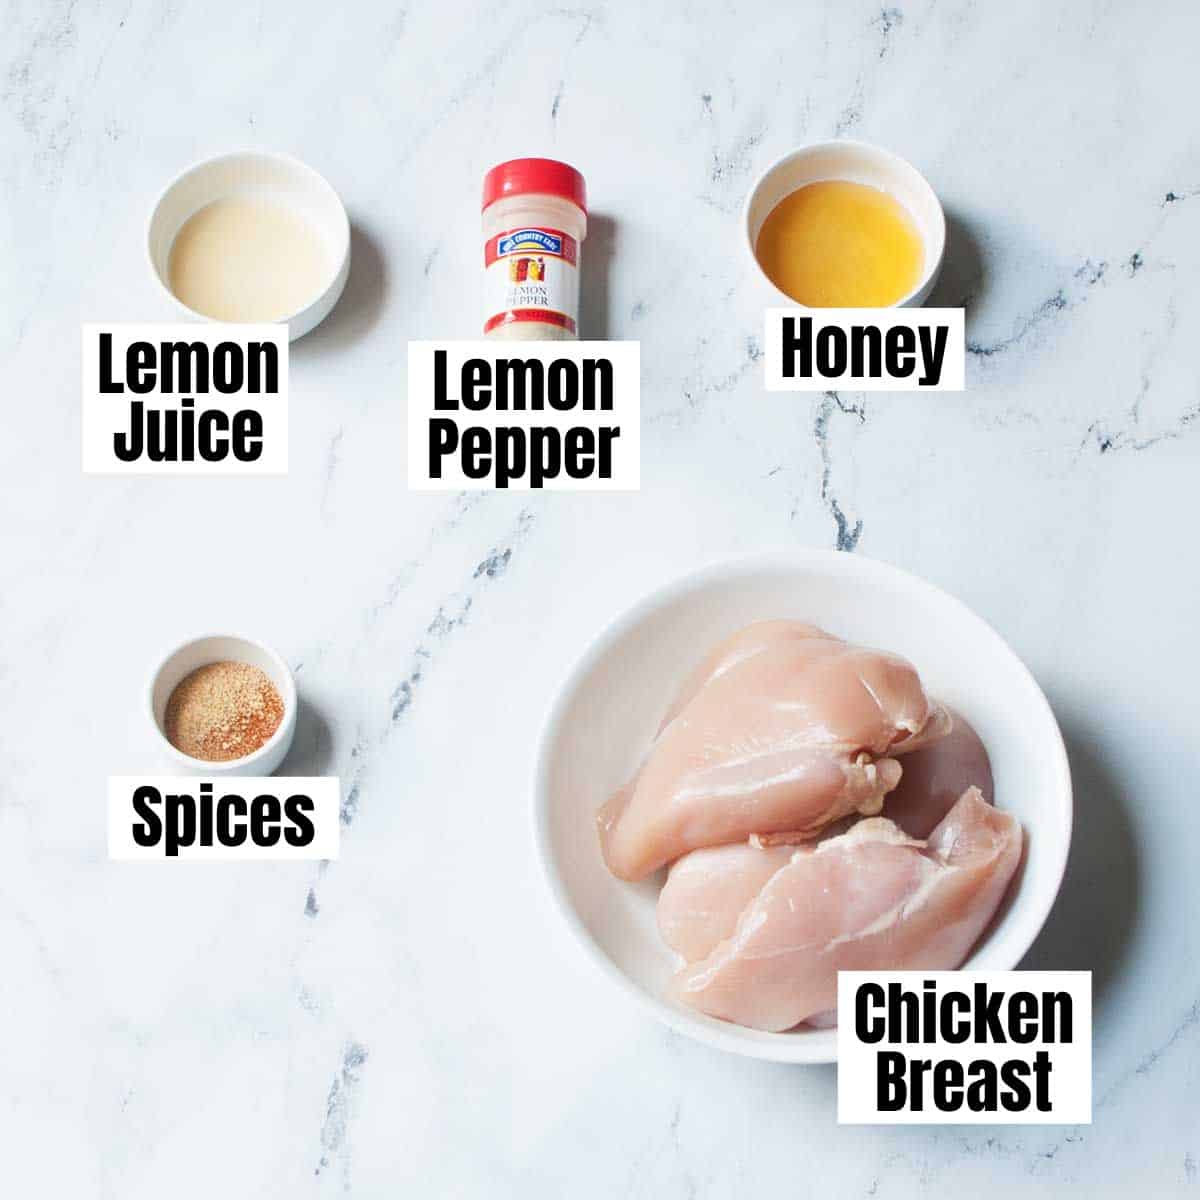 ingredients needed to make Honey Lemon Pepper Chicken